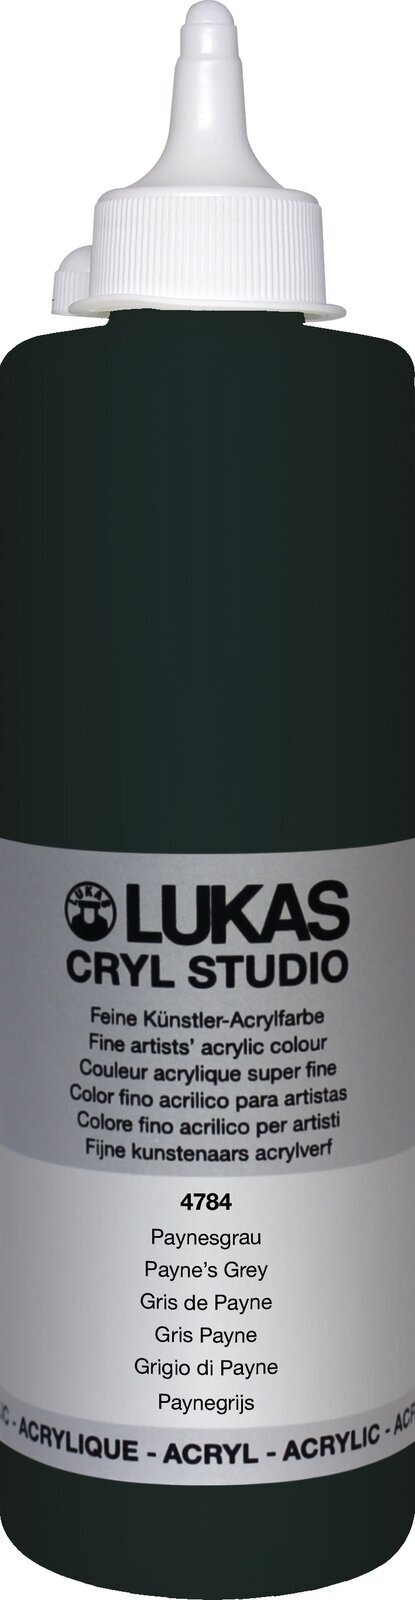 Tinta acrílica Lukas Cryl Studio Tinta acrílica 500 ml Payne's Grey